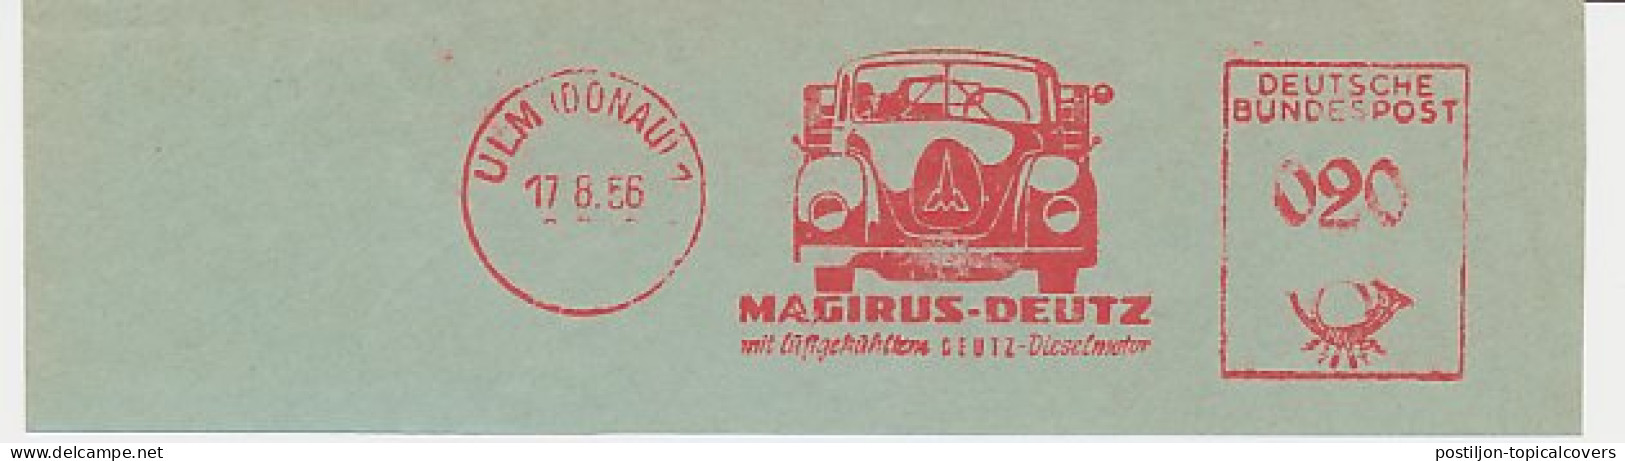 Meter Cut Germany 1956 Truck - Magirus Deutz - LKW